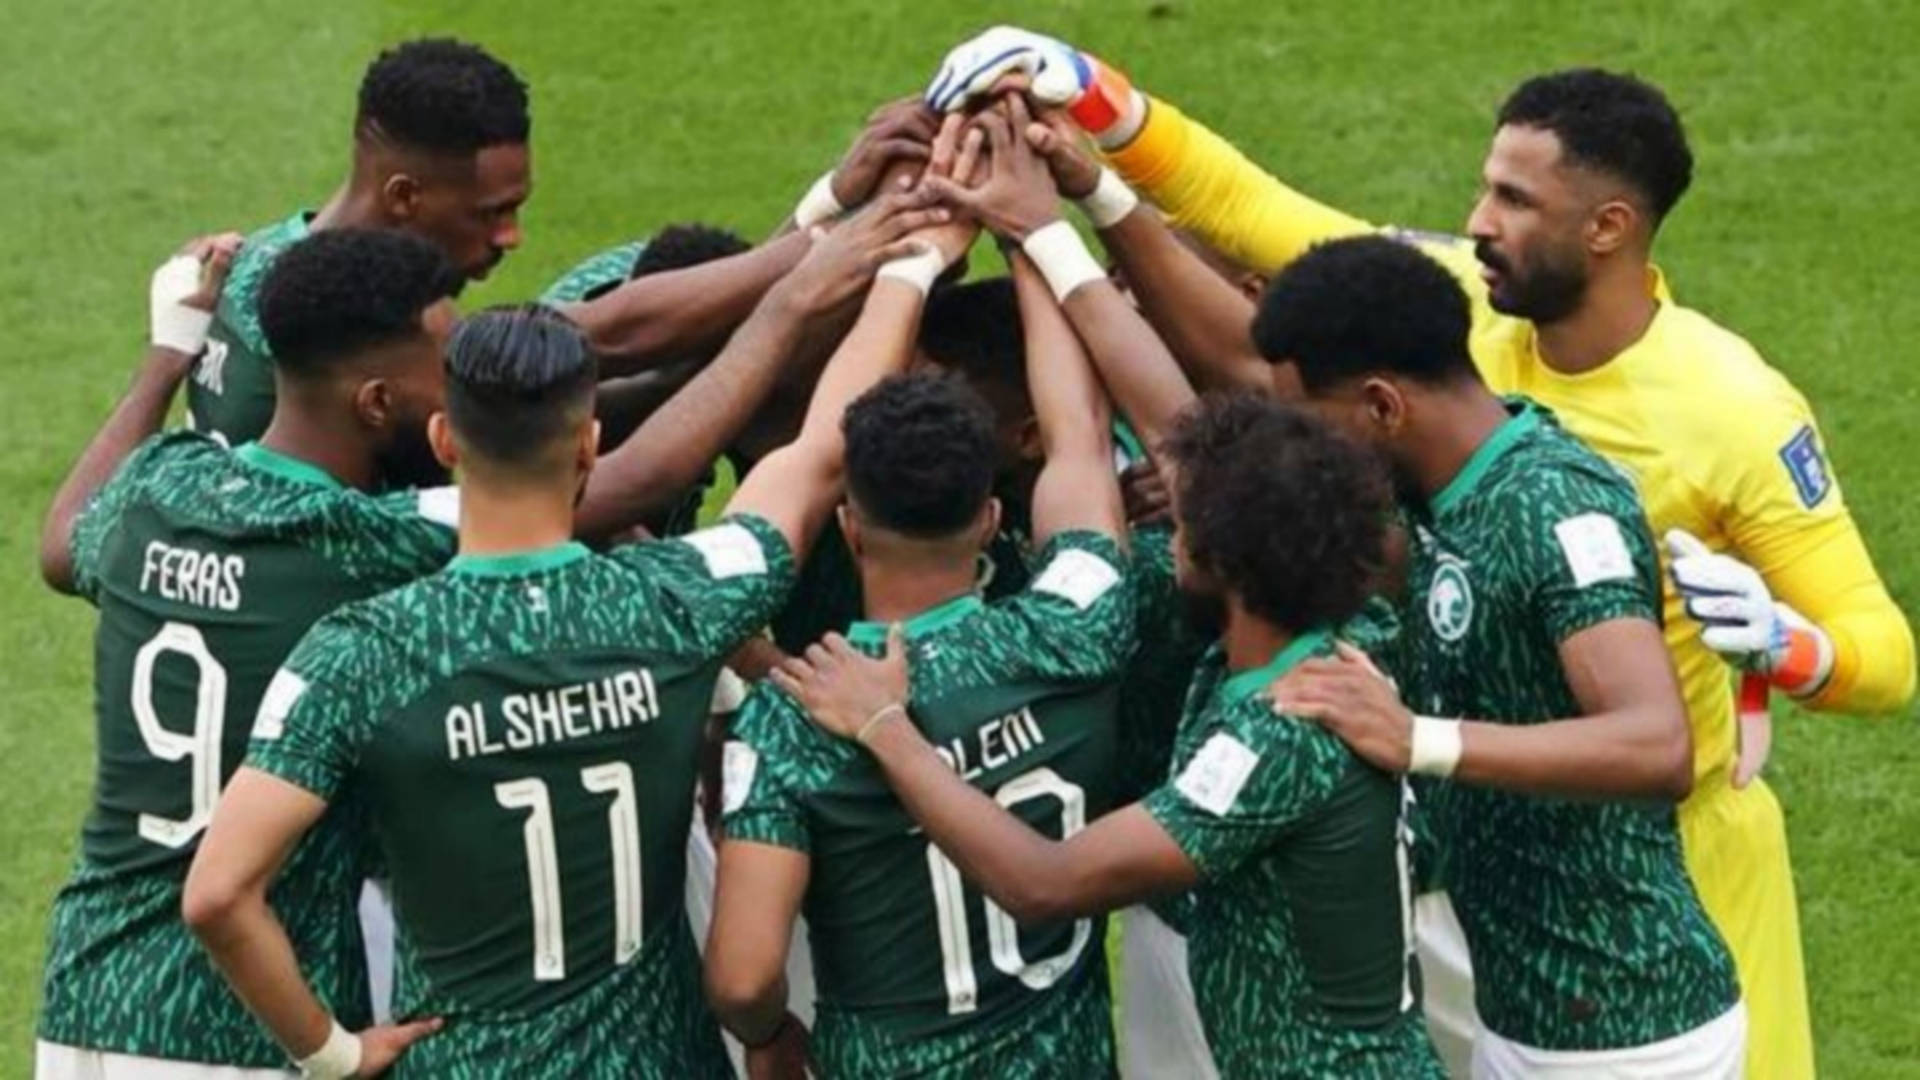 Saudi Arabia National Football Team Group Cheer Picture